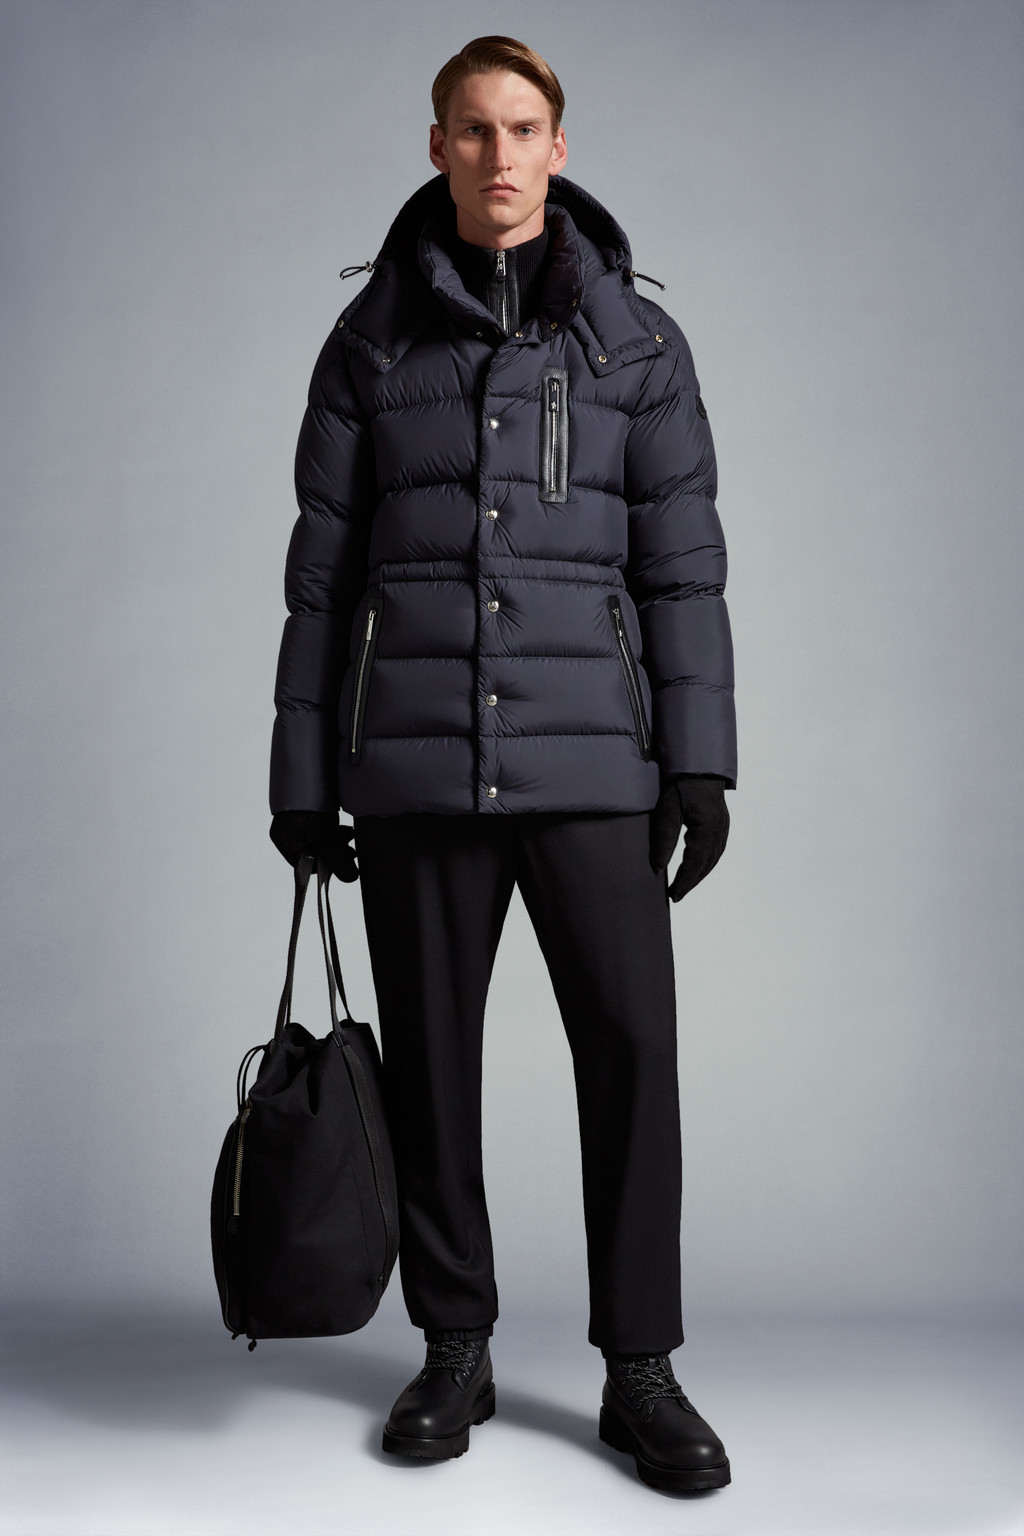 Coats \u0026 Jackets for Men - Outerwear | Moncler US